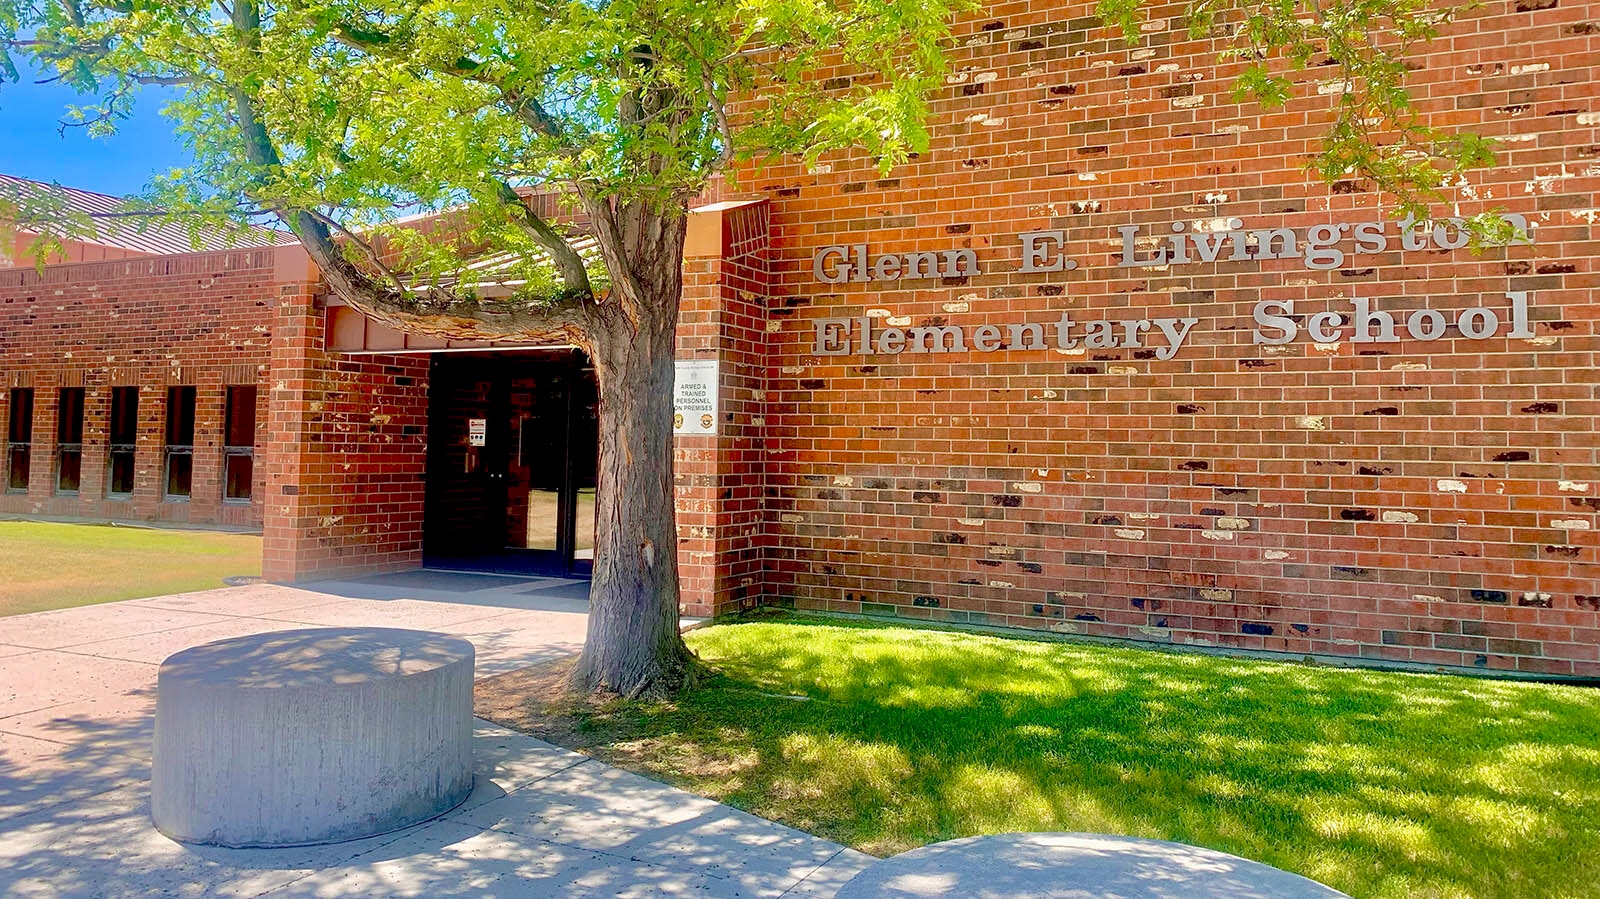 Livingston Elementary School in Cody, Wyoming.